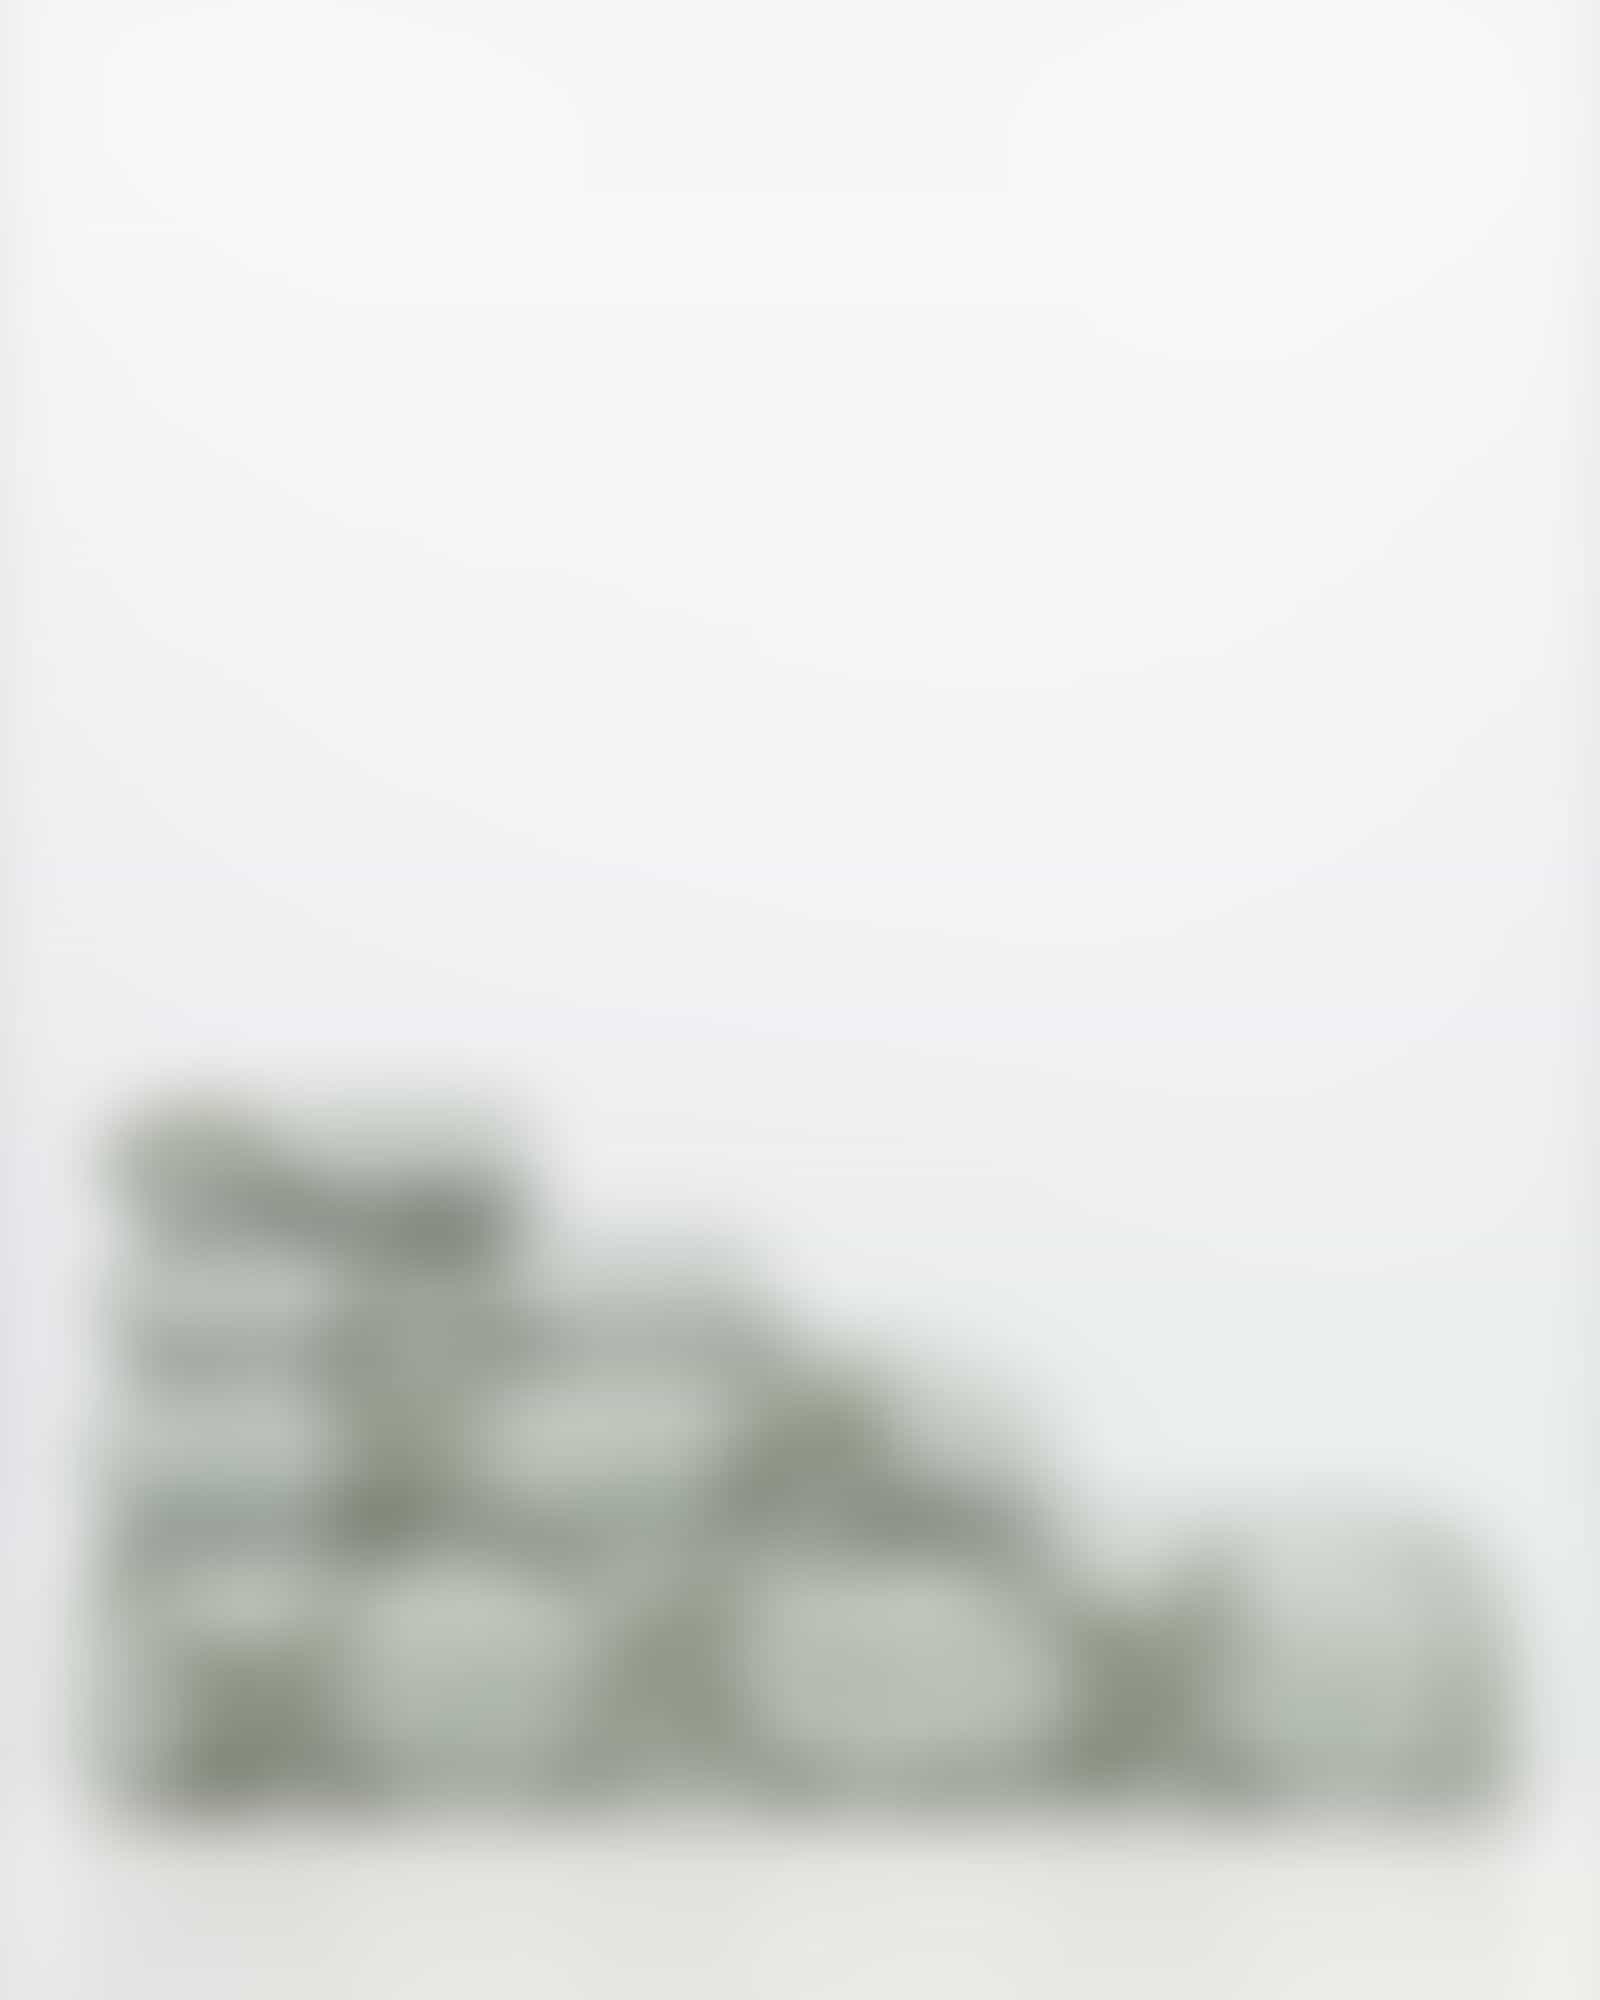 JOOP! Classic - Cornflower 1611 - Farbe: Salbei - 47 - Duschtuch 80x150 cm Detailbild 3